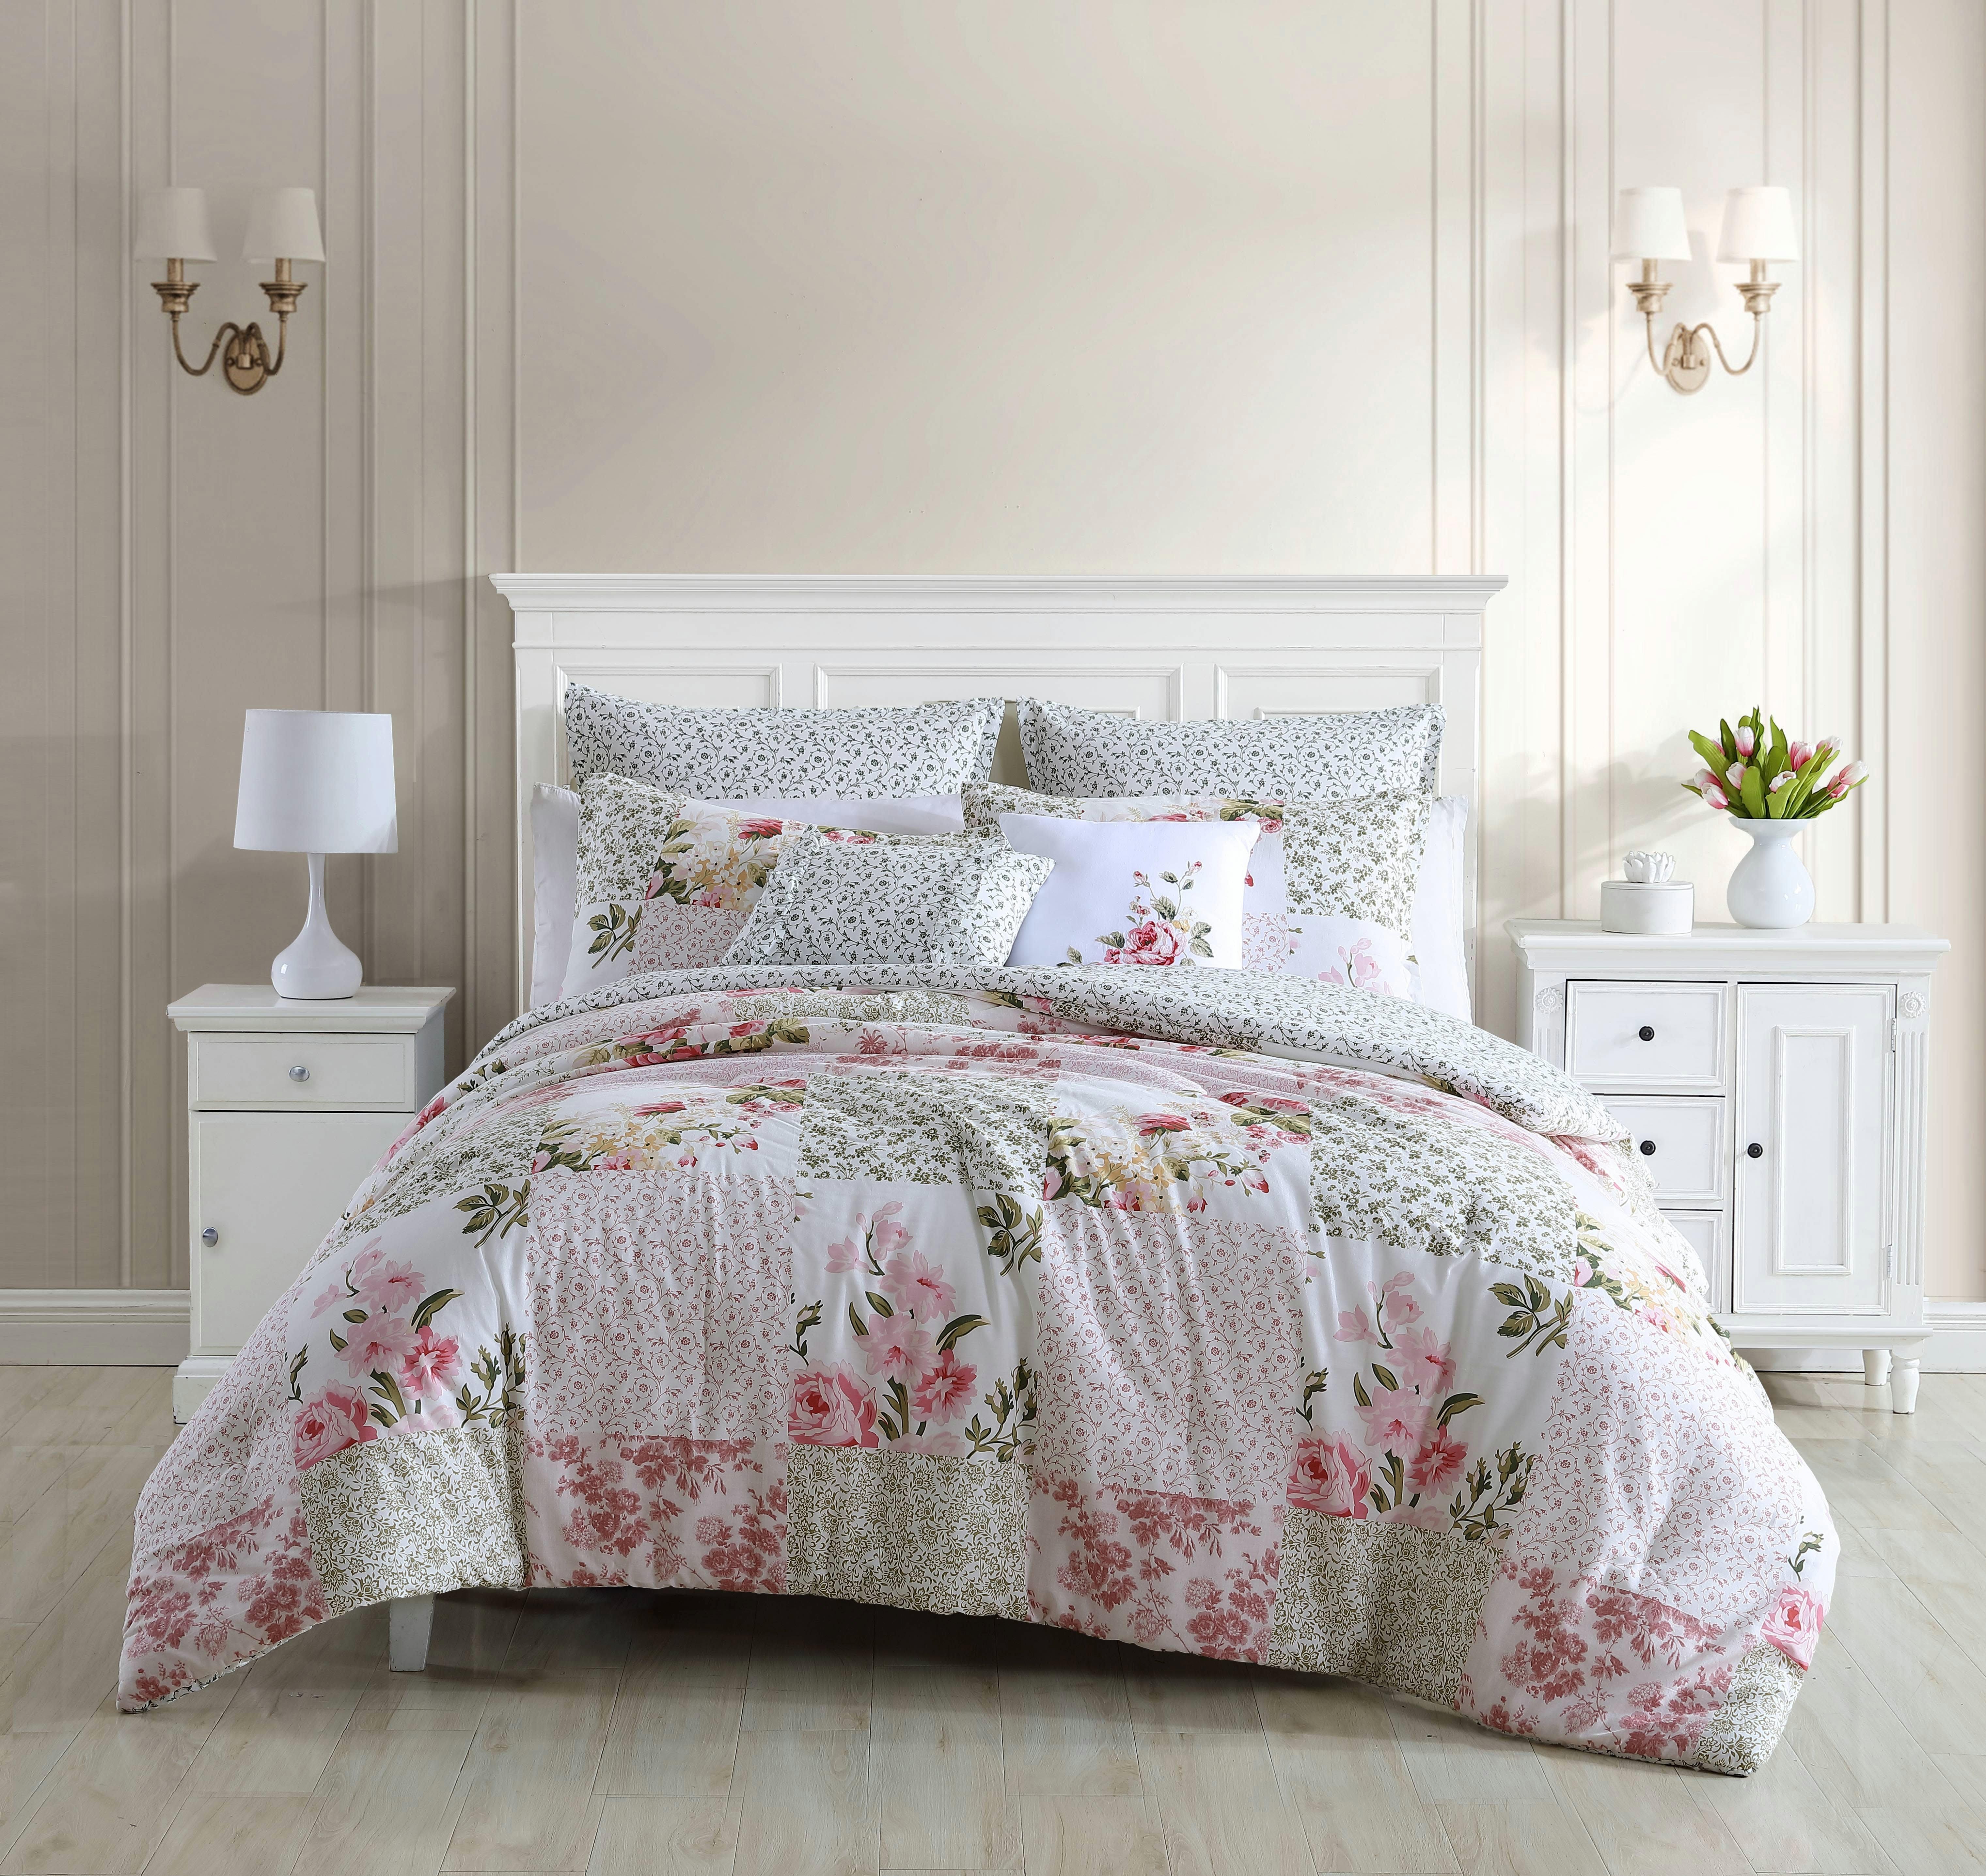 Laura Ashley Ailyn 100% Cotton Comforter Bedding Set